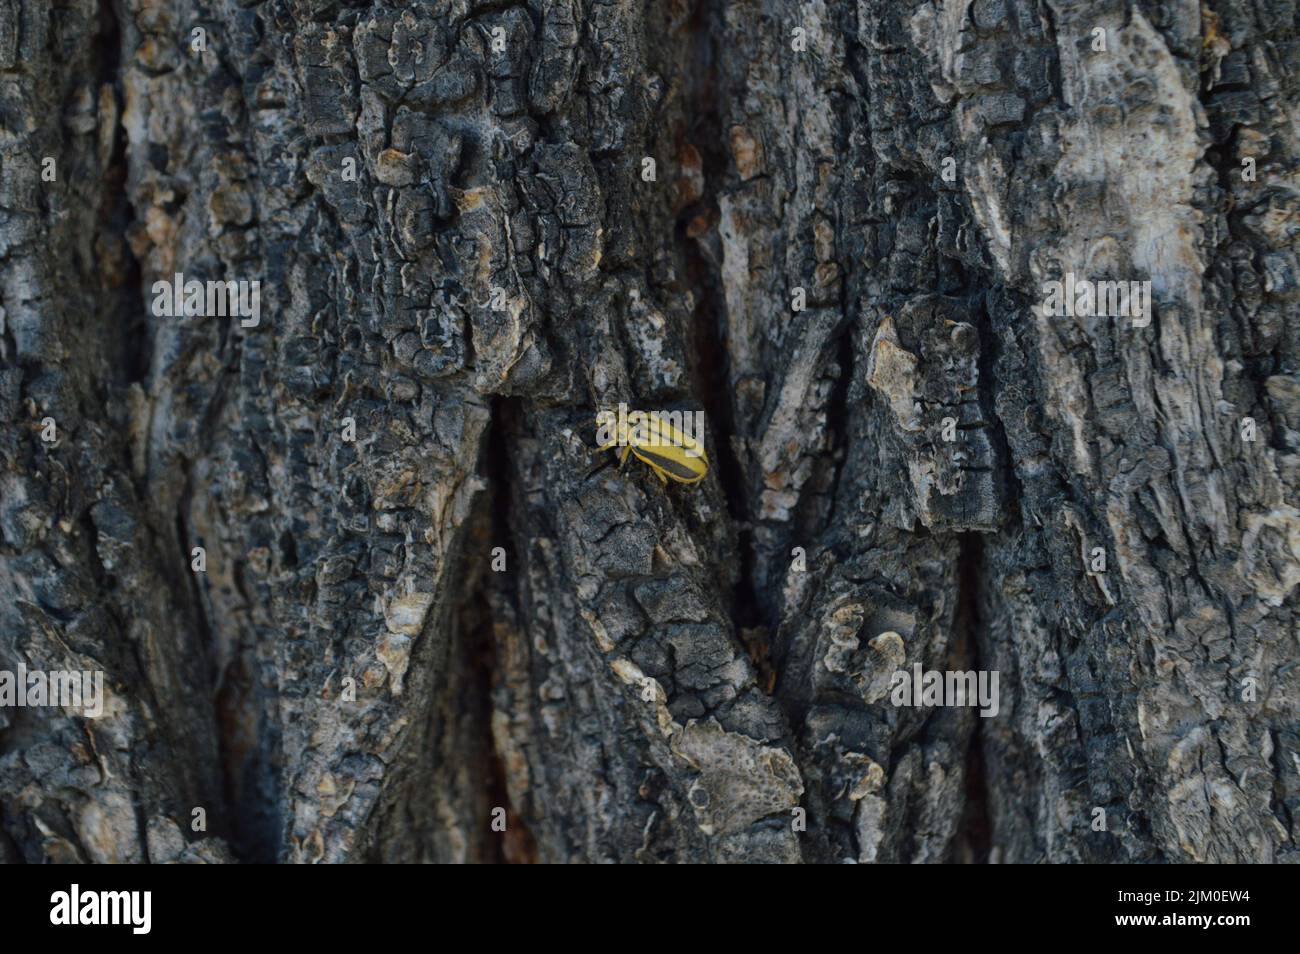 A striped yellow beetle climbing on a tree Stock Photo